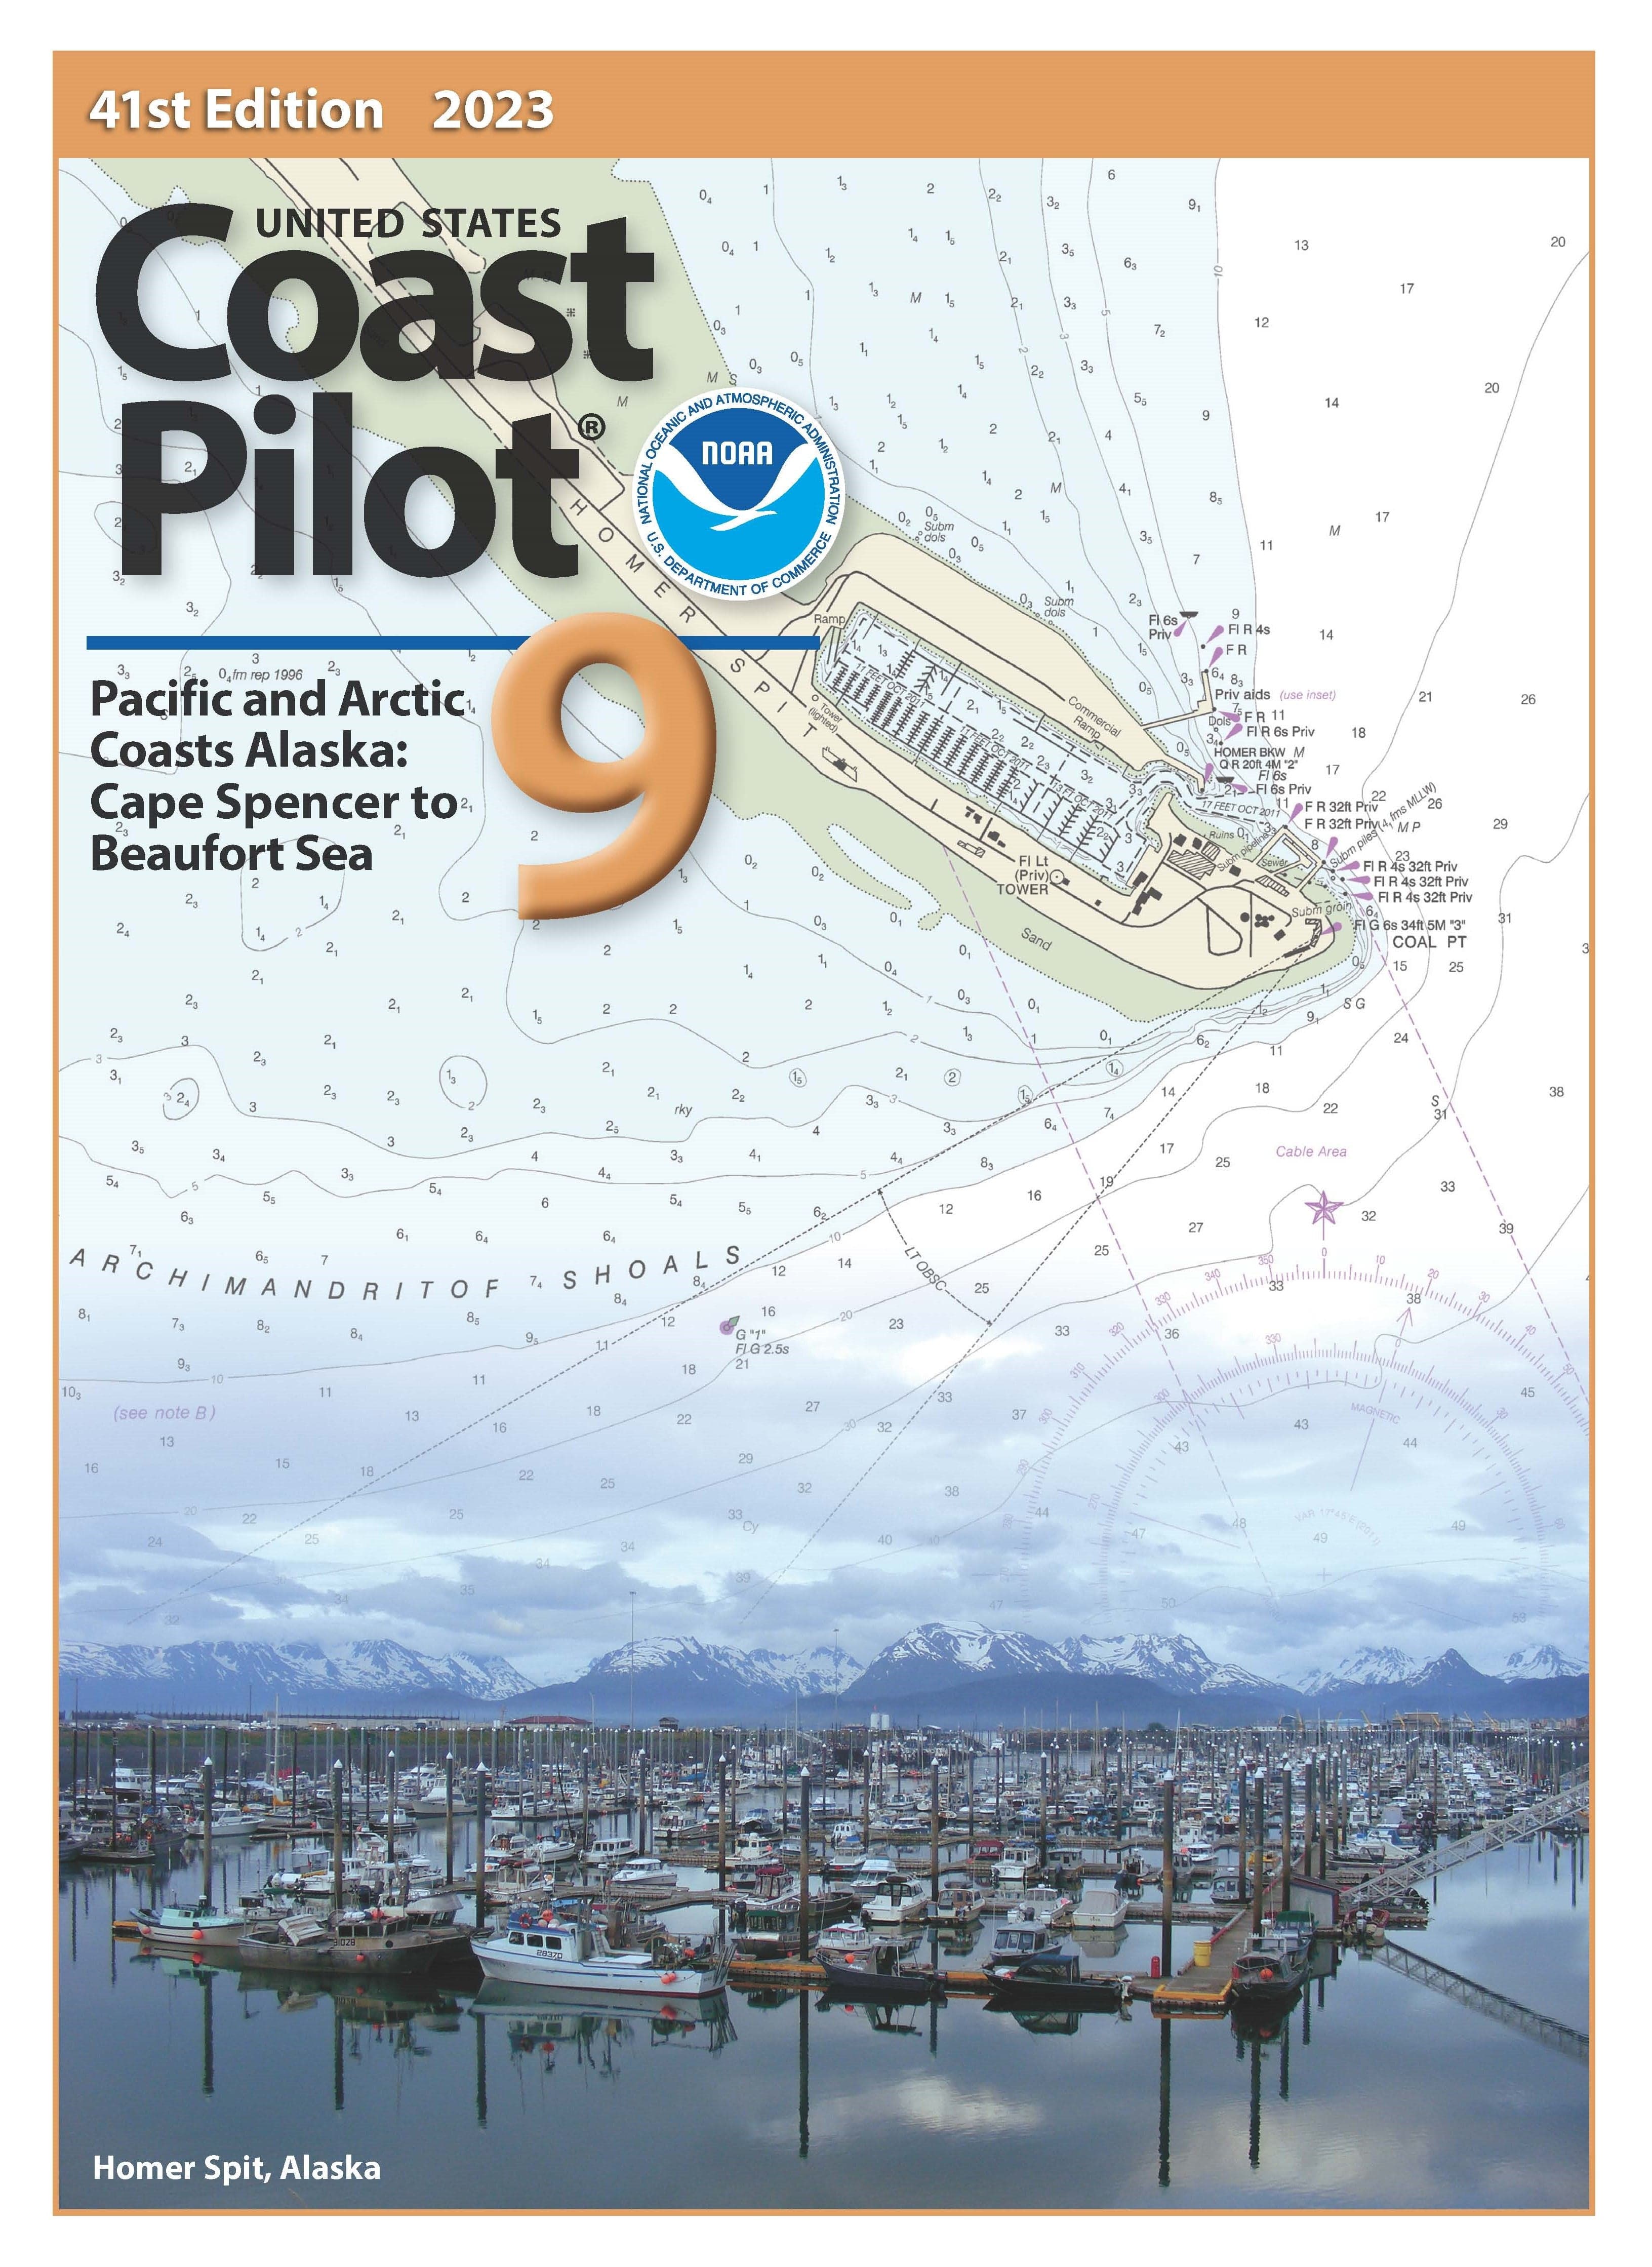 U.S. Coast Pilot 9: Alaska - Cape Spencer to Beaufort Sea - 41st Edition, 2023